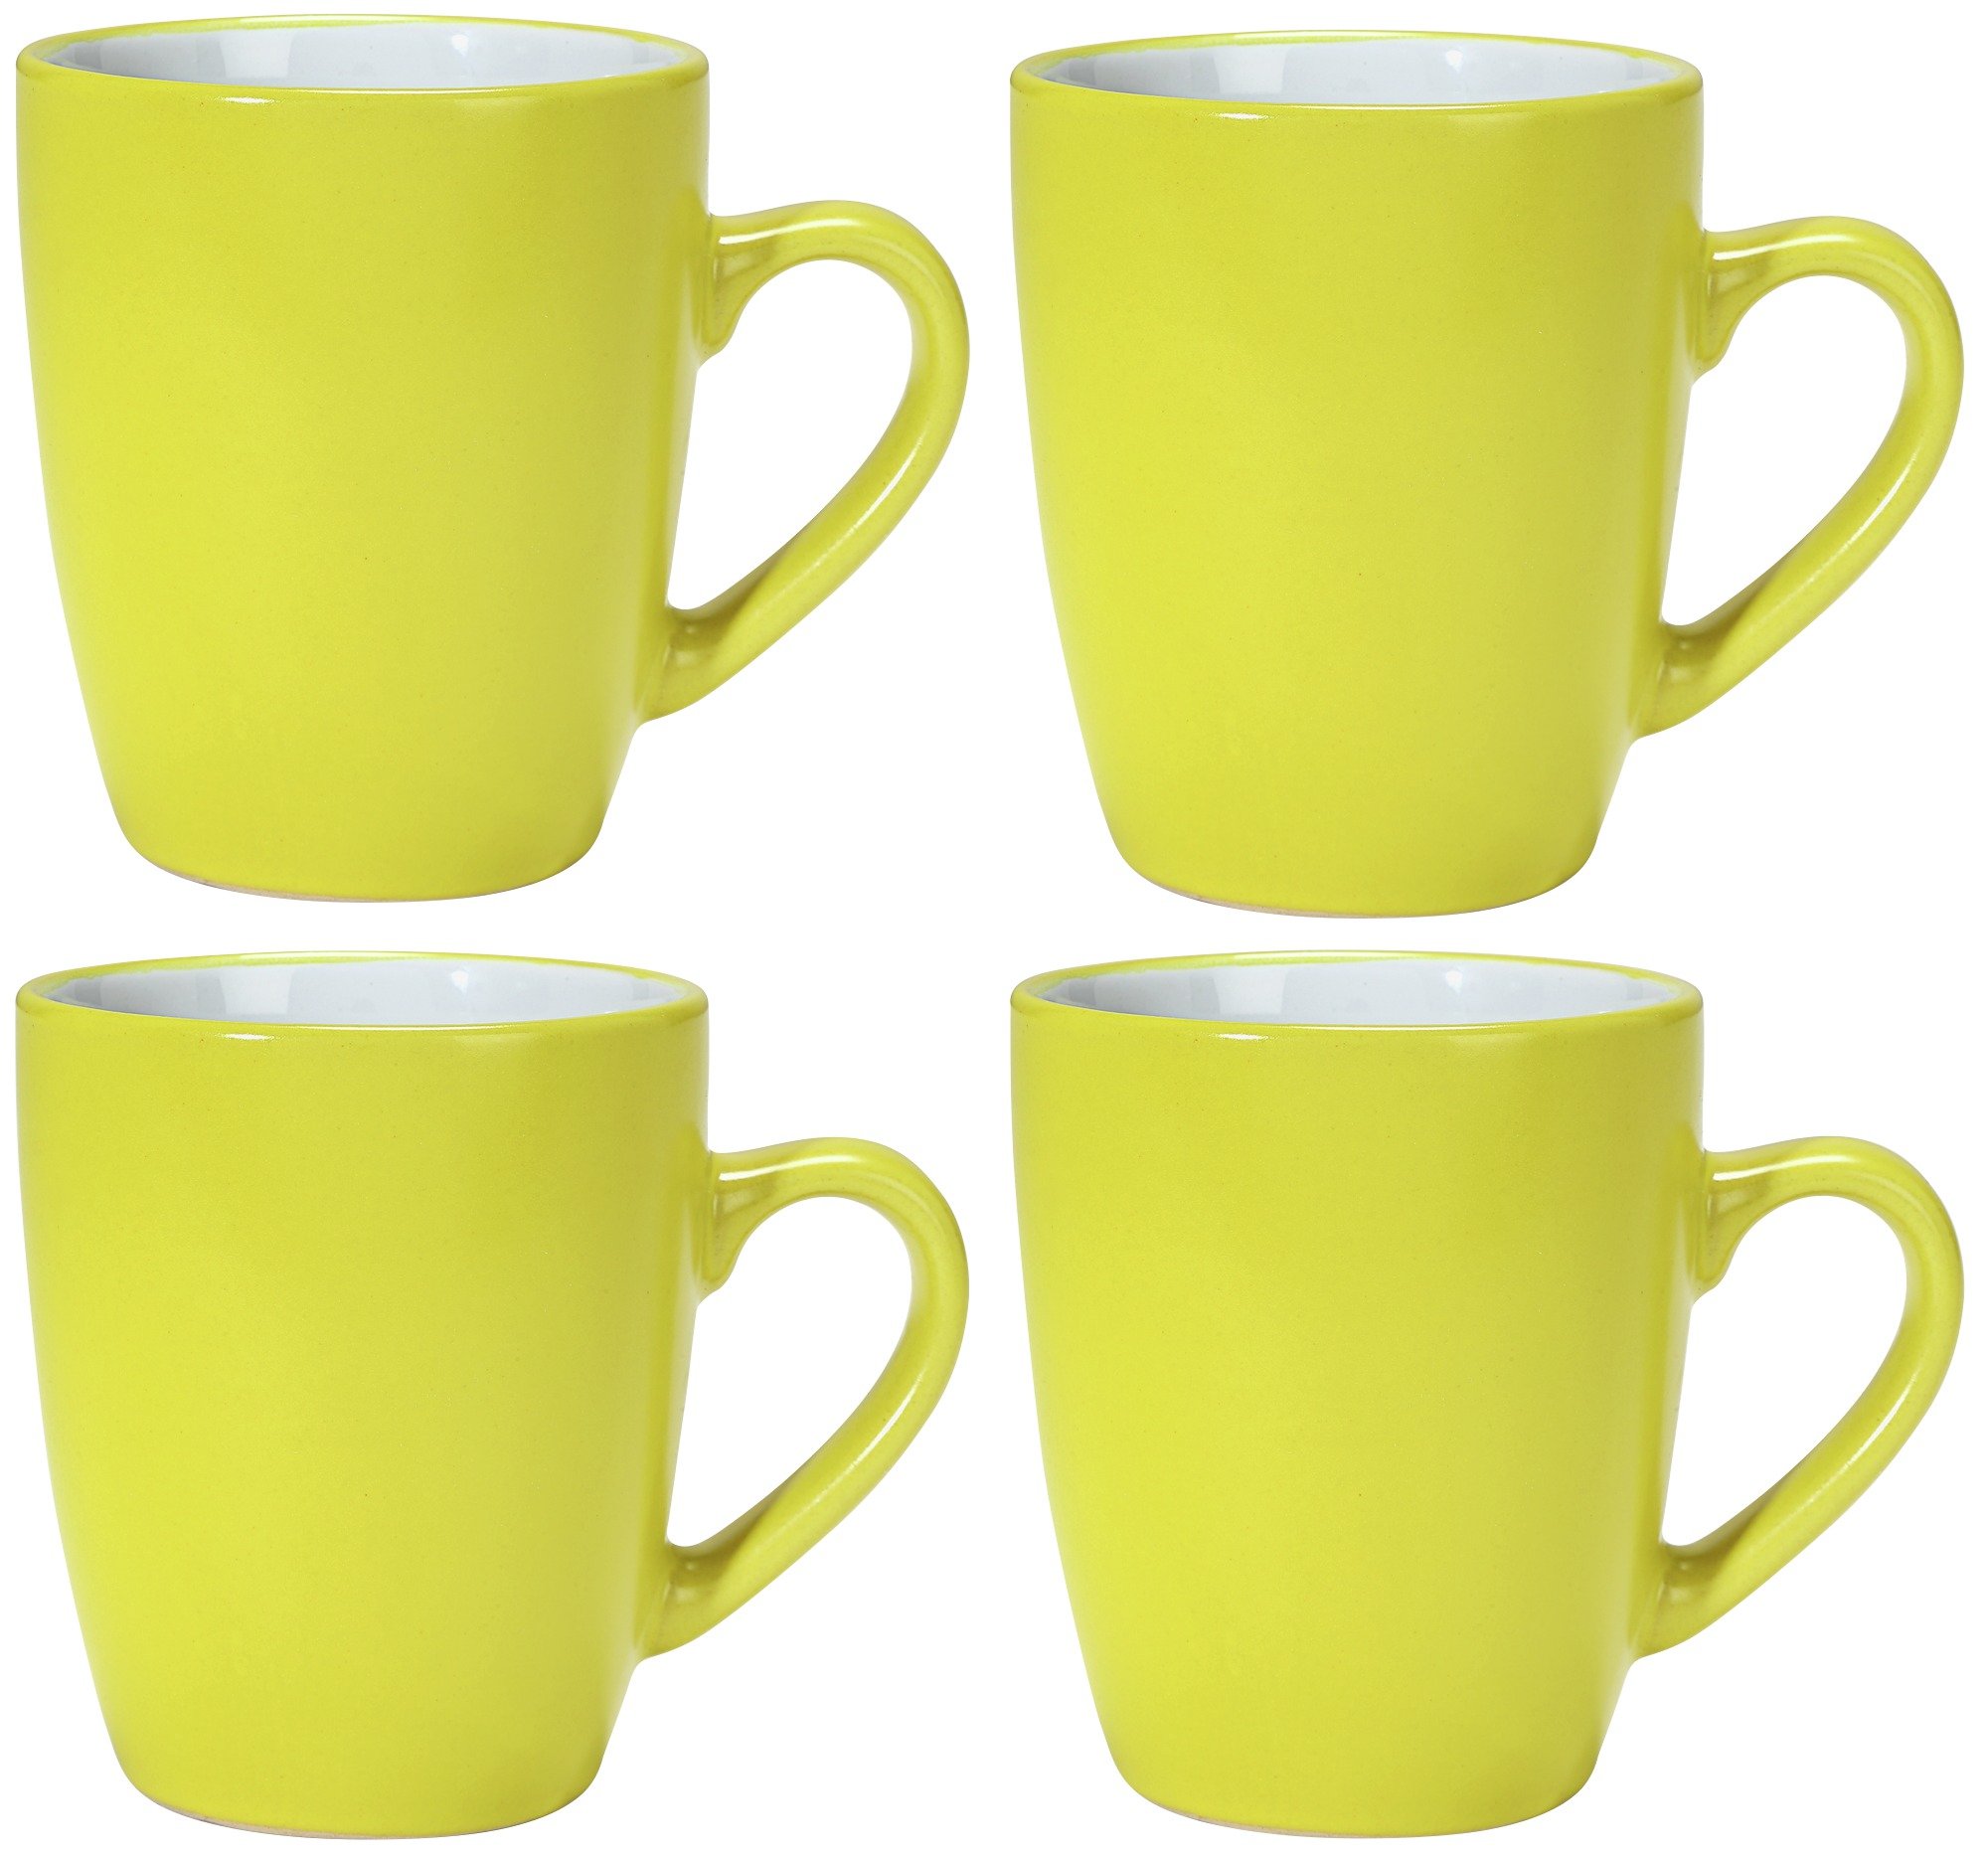 ColourMatch Set of 4 Mugs - Zest